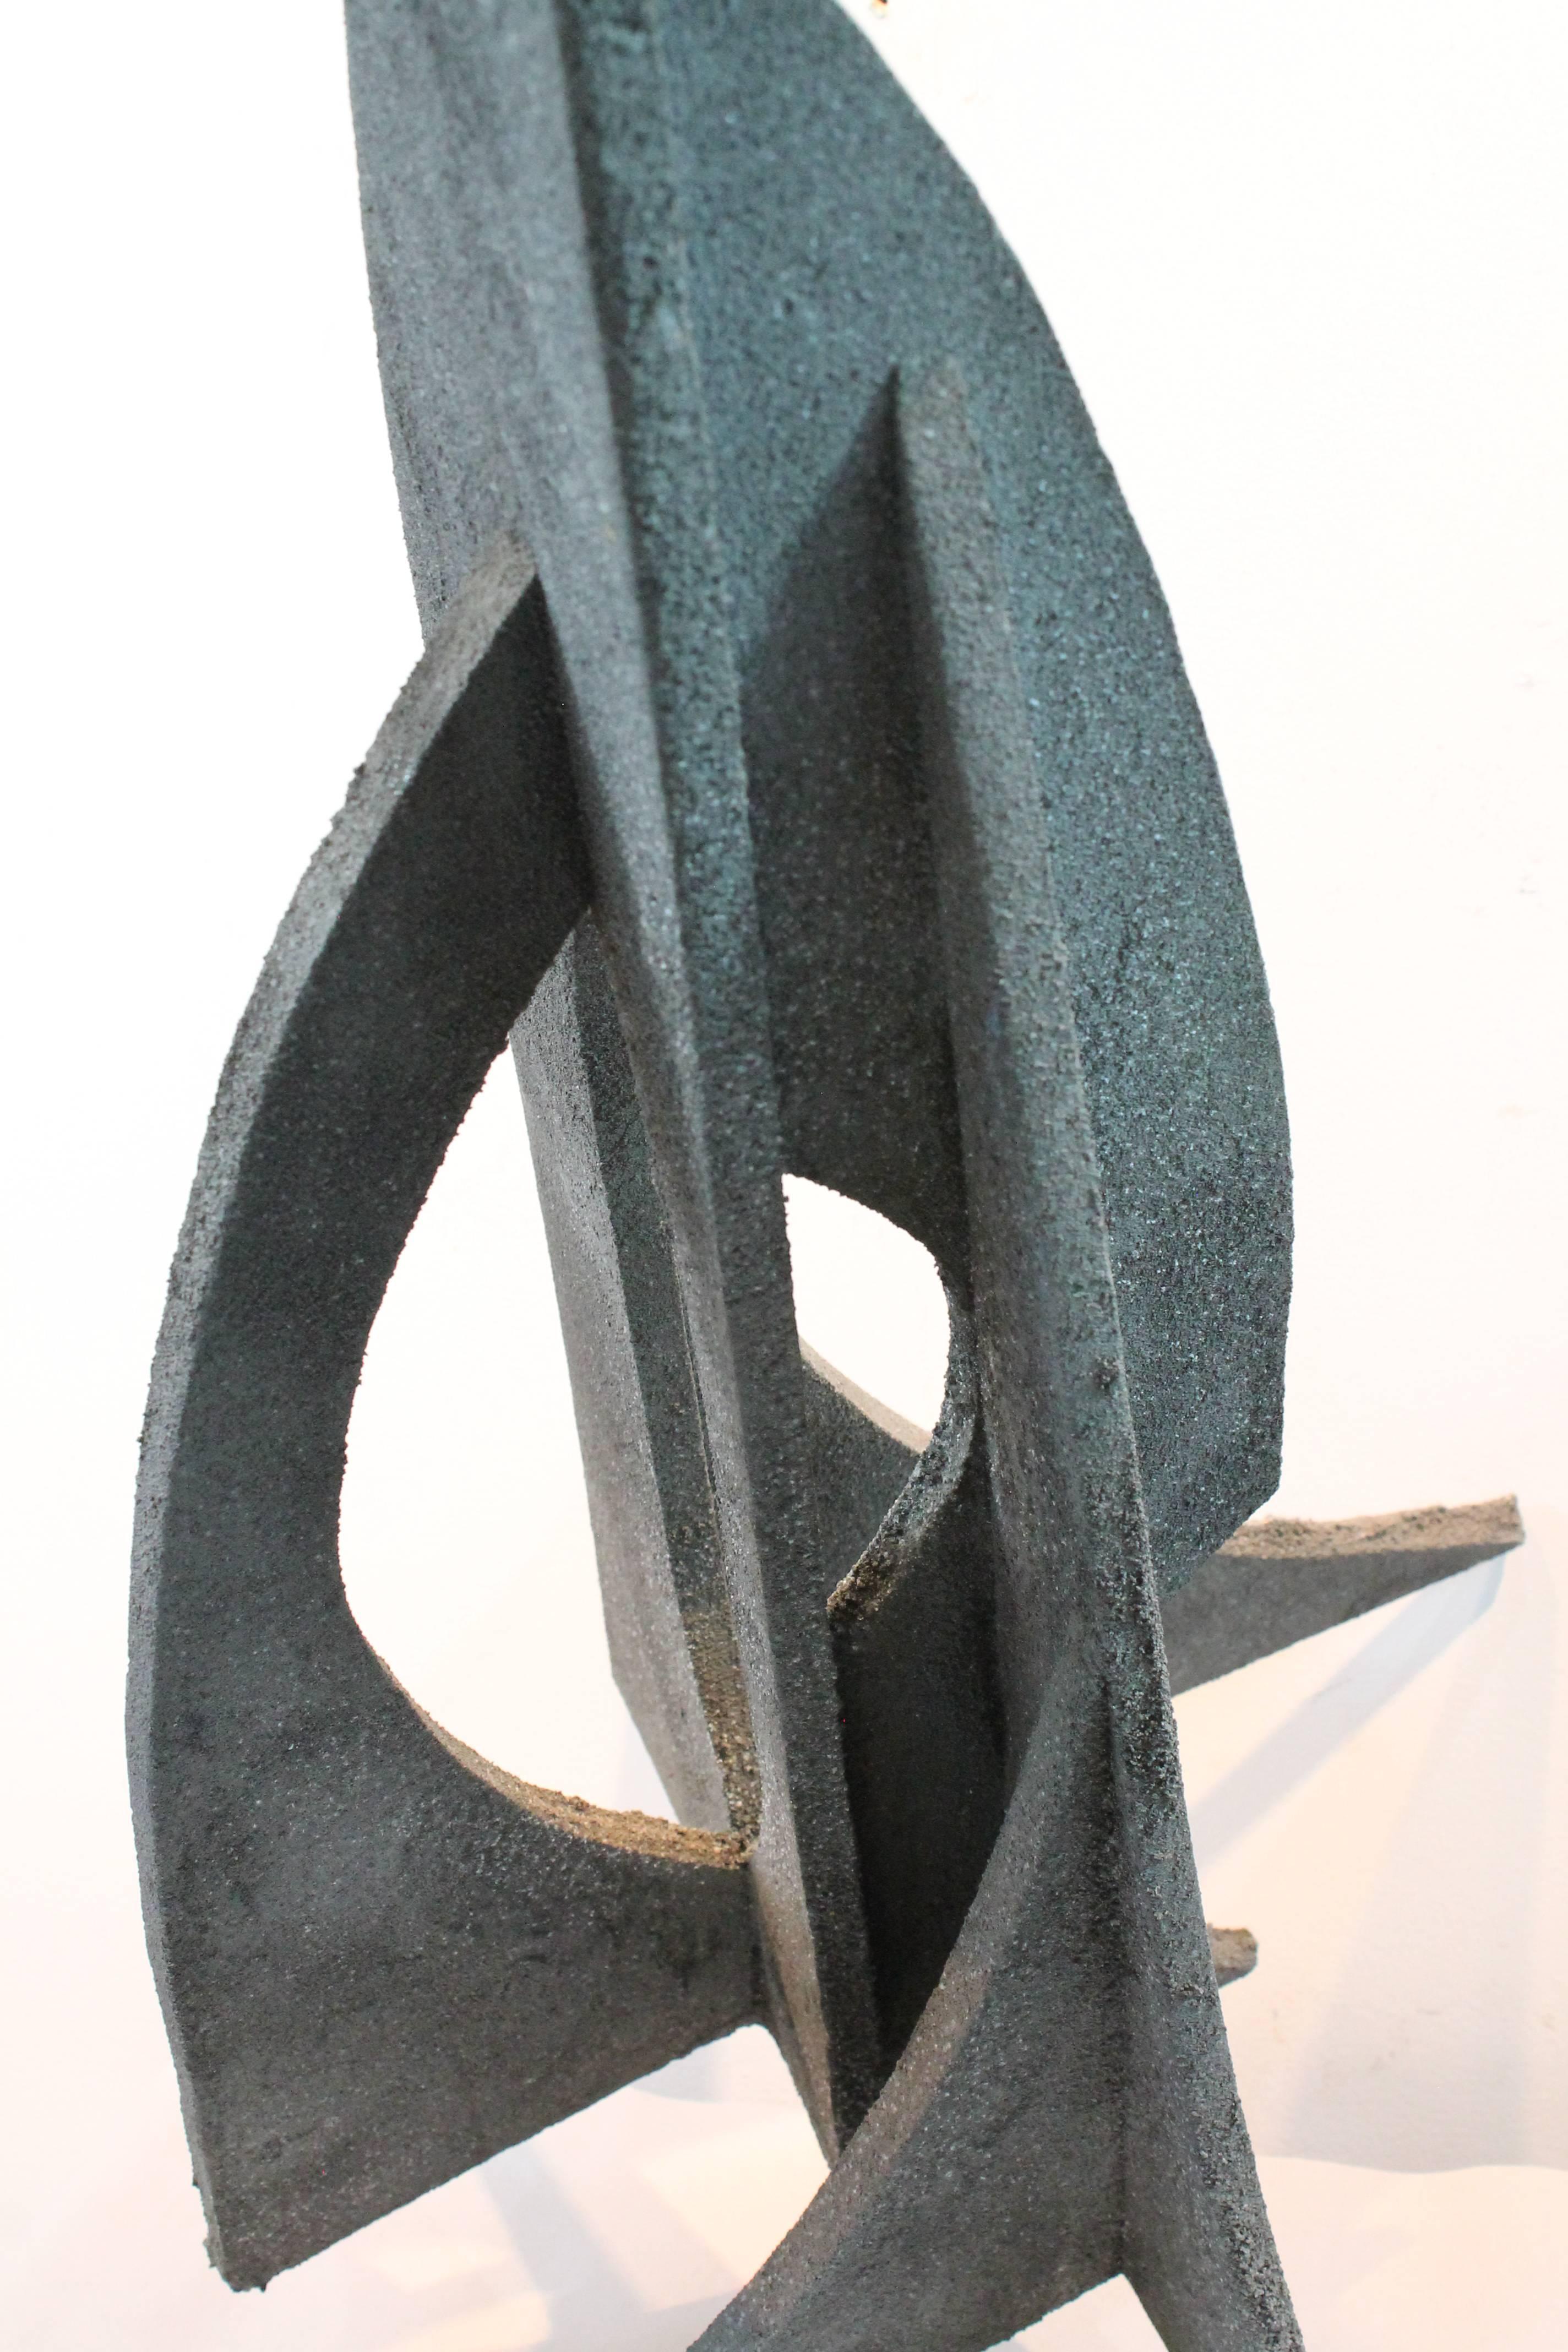 Aluminum Mid-Century Modernist Angular Sculpture For Sale